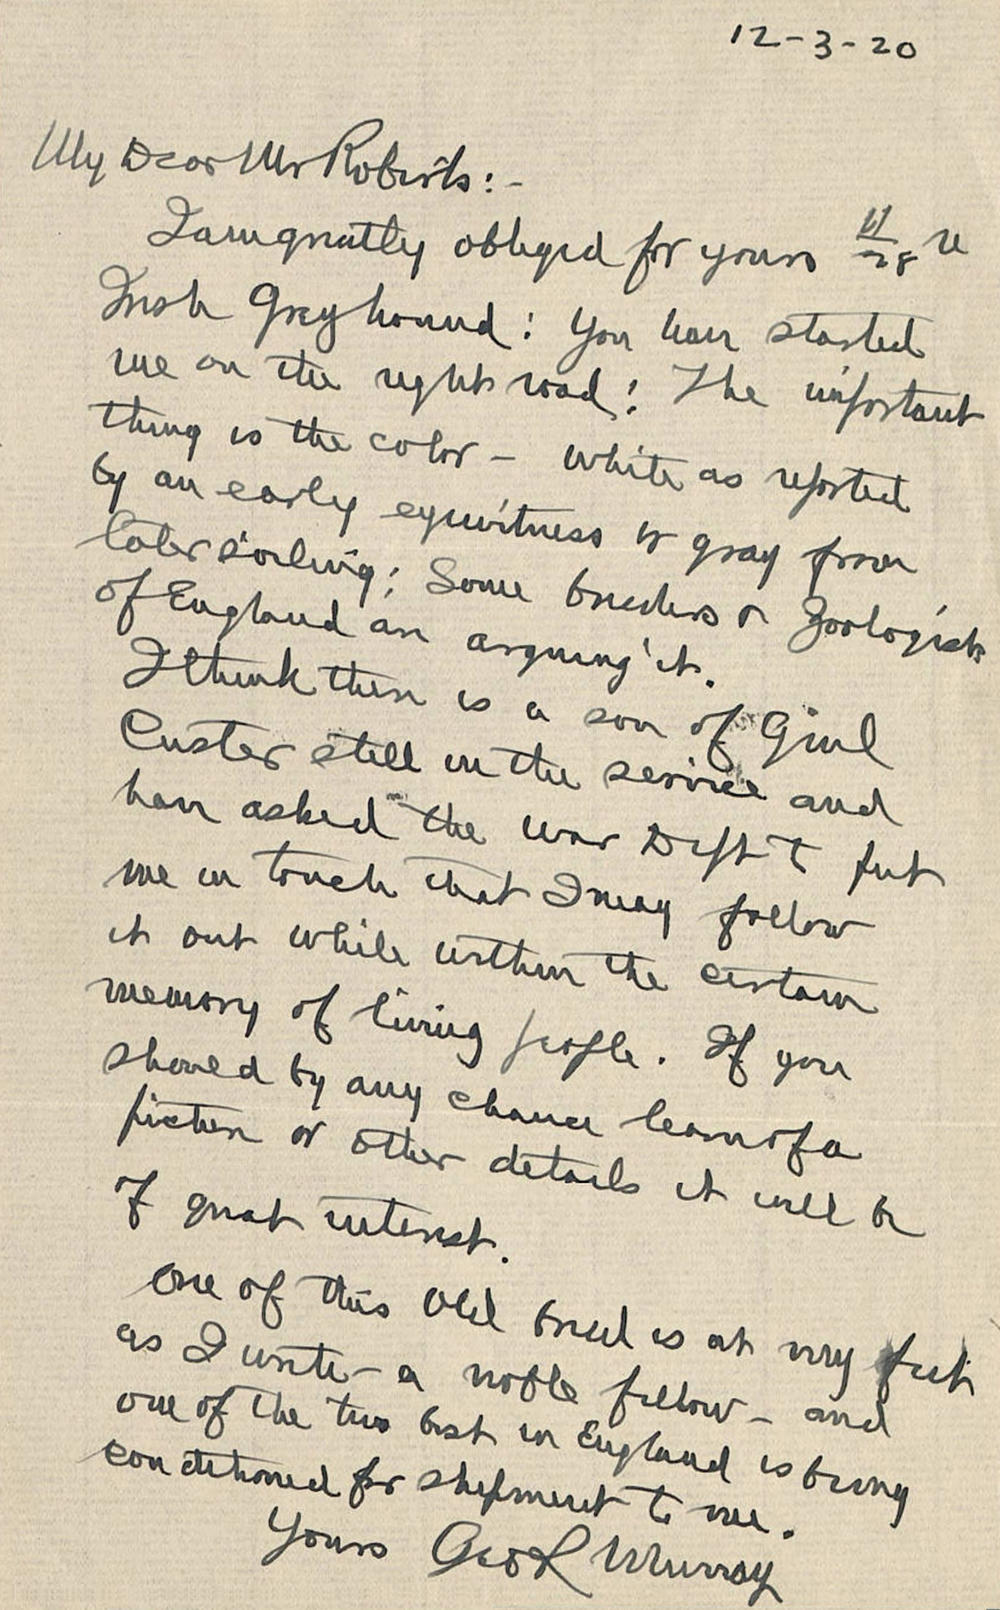 Murray's response to Roberts - December 3, 1920